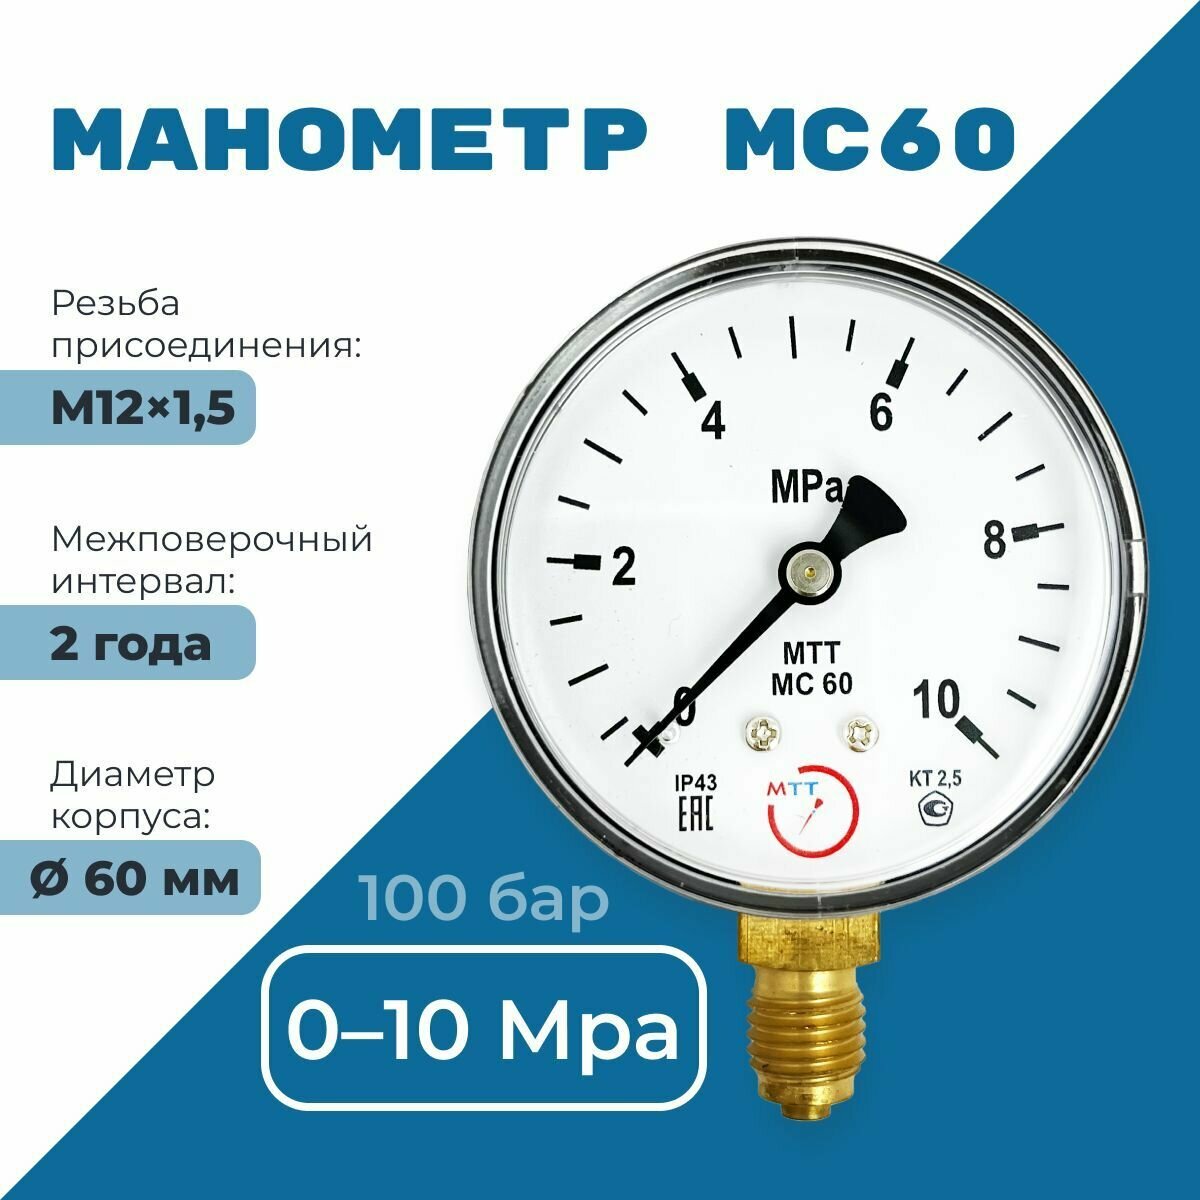 Манометр МС60 давление 0-10 МПа (100 бар) резьба М12х1.5 класс точности 25 корпус 62 мм. поверка 2 года